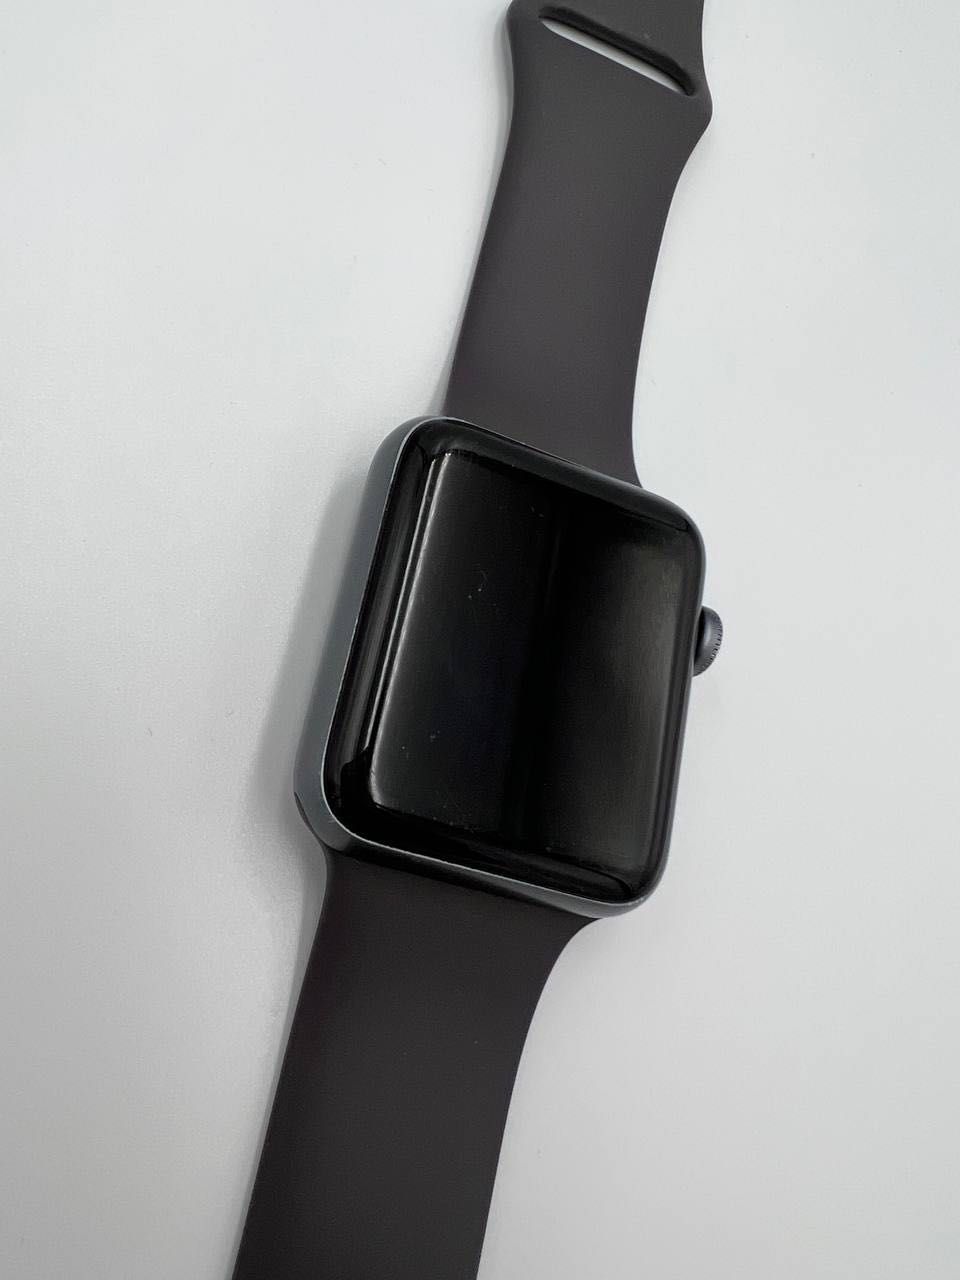 Apple Watch 3.42 Bat: 76%